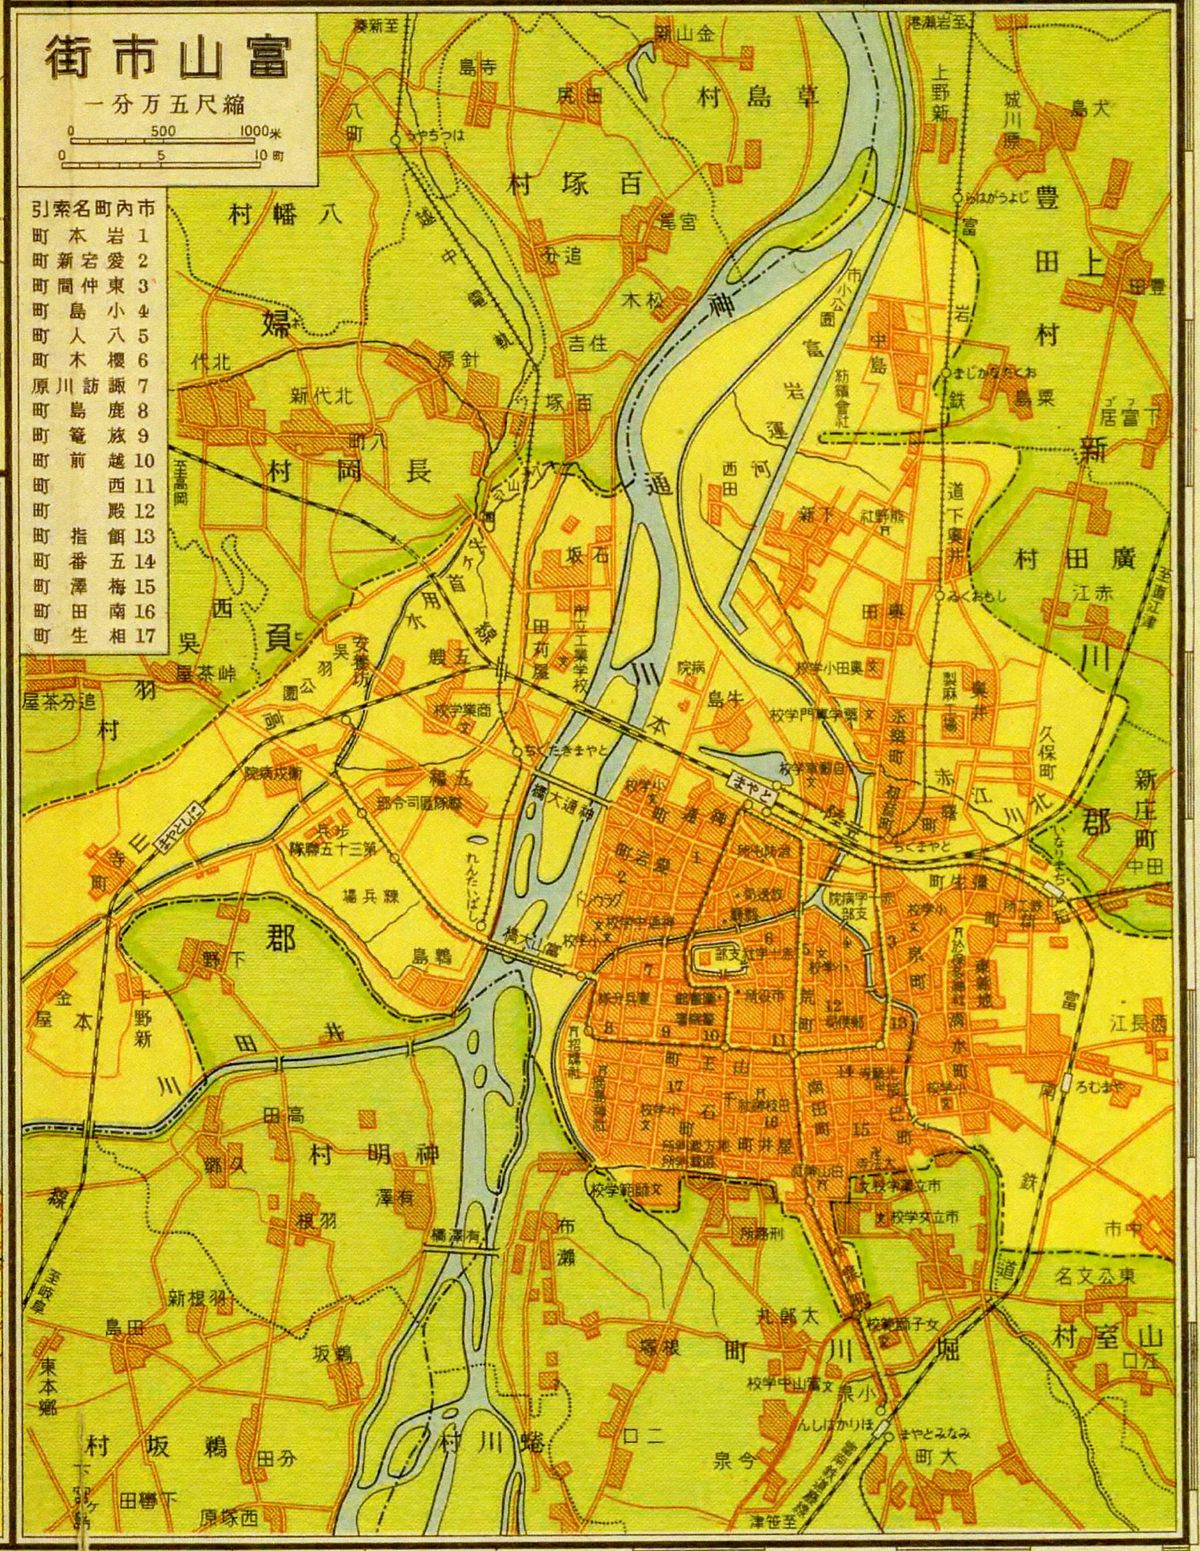 File:昭和12年当時の富山市街地図.jpg - Wikipedia